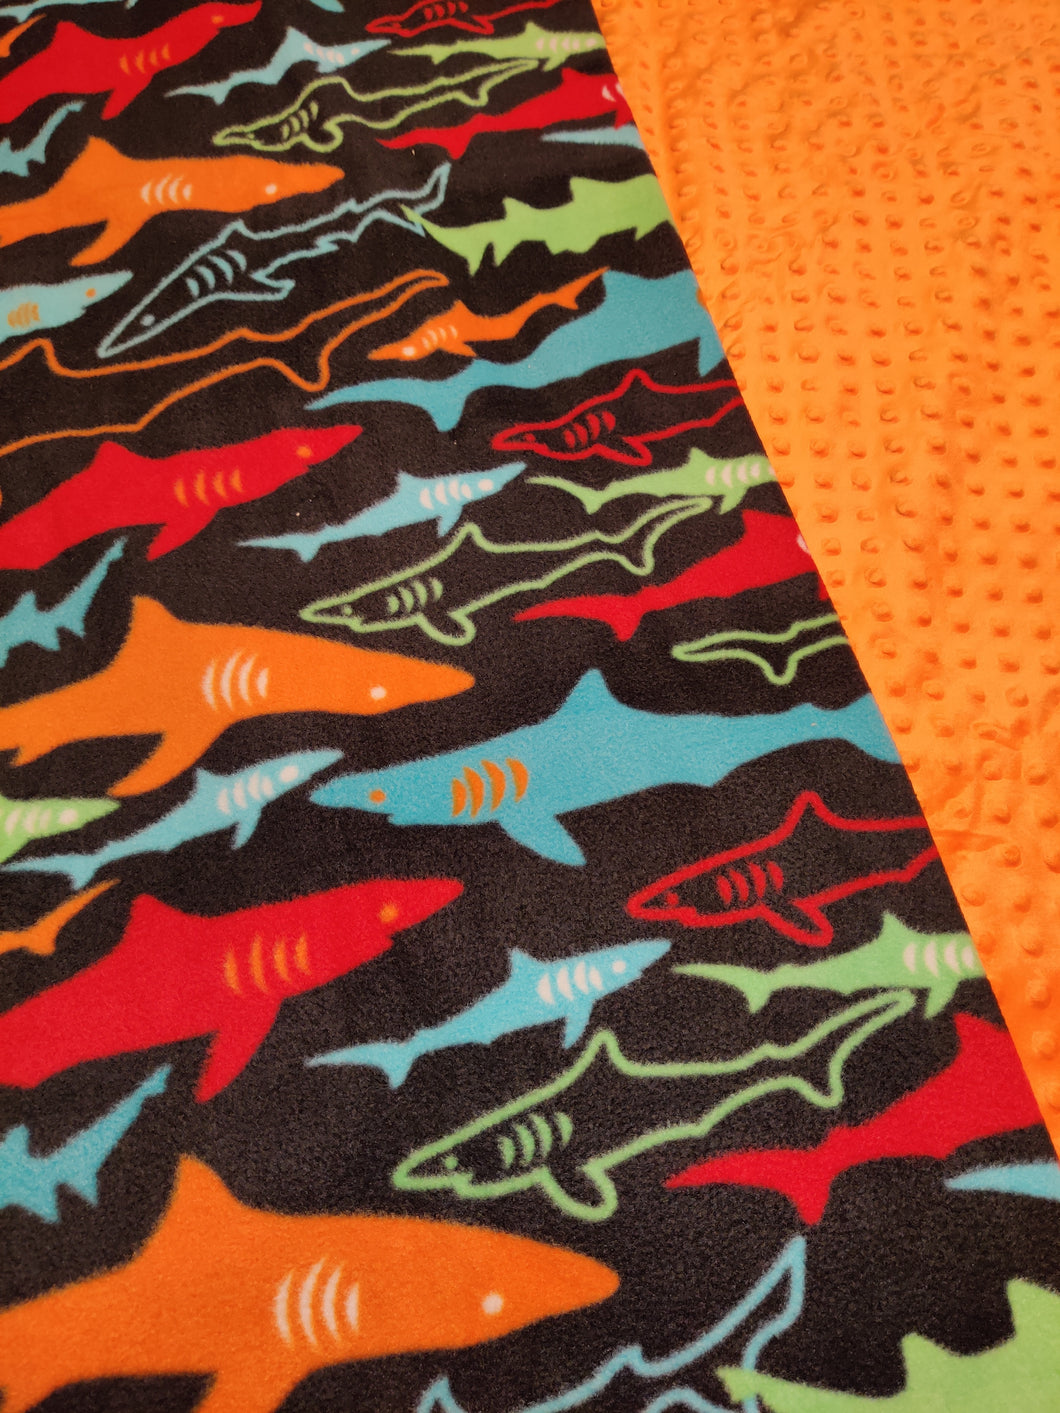 Throw Blanket - Sharks, Skinny Red, Orange & Green Fleece::Orange Bumpy